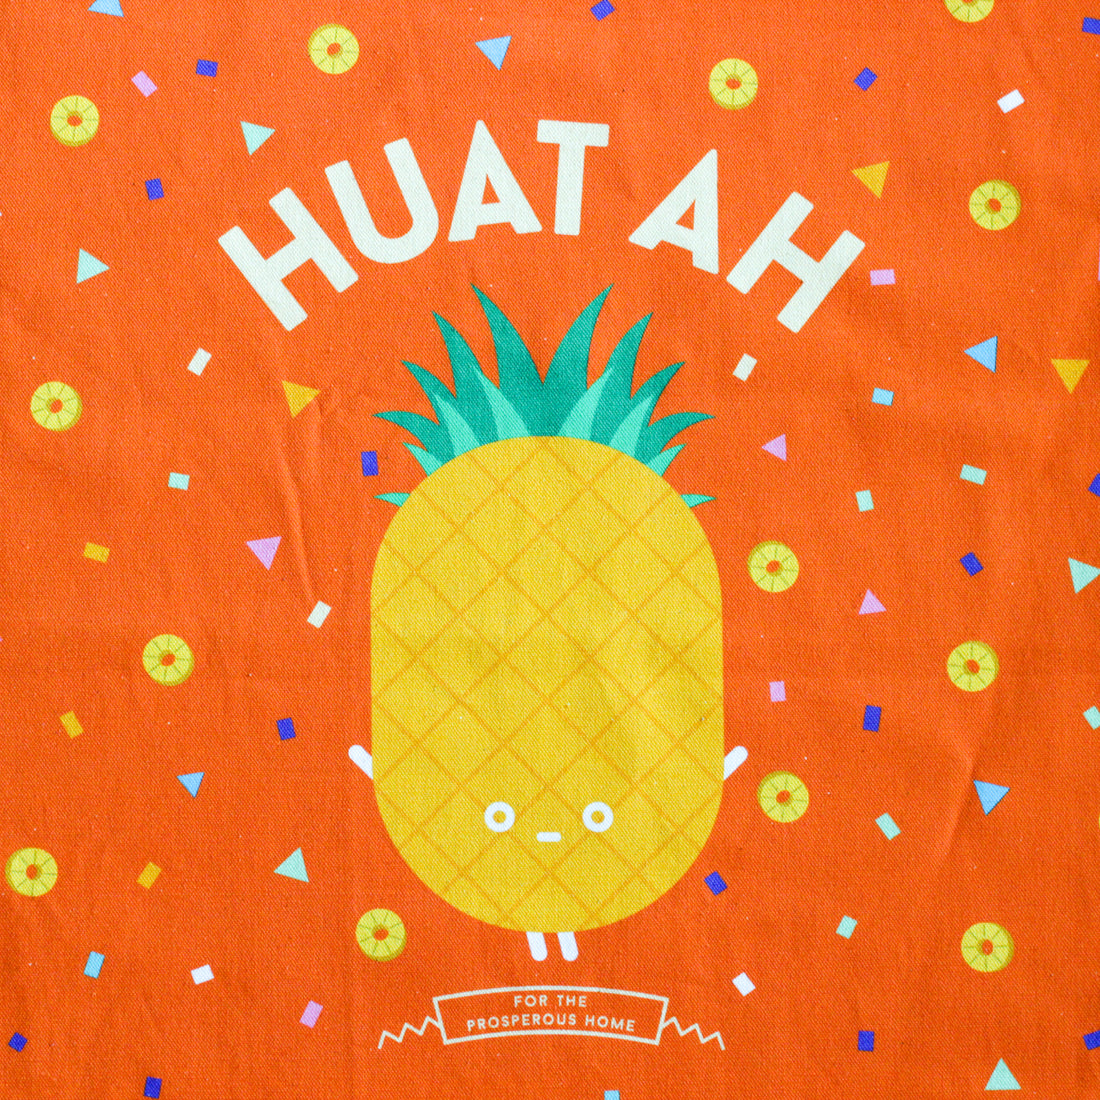 Huat Ah Noren (Confetti)